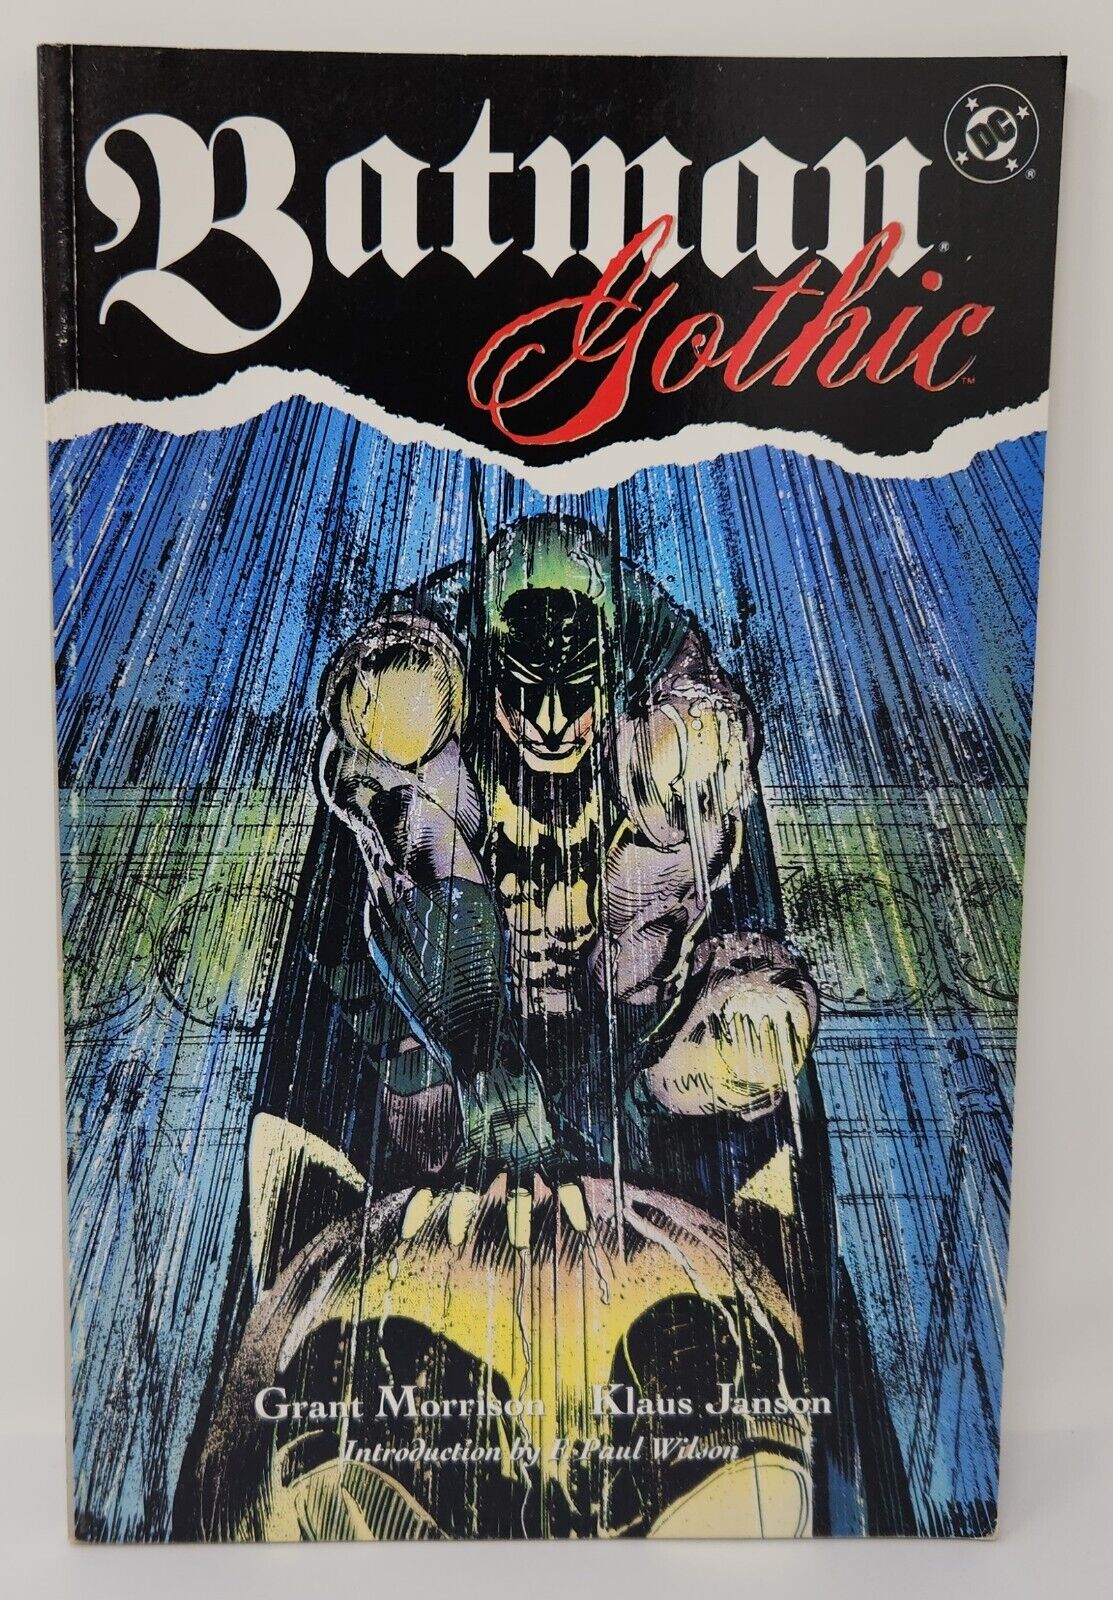 BATMAN: GOTHIC 1992 FIRST PRINTING tpb GRANT MORRISON & KLAUS JANSON